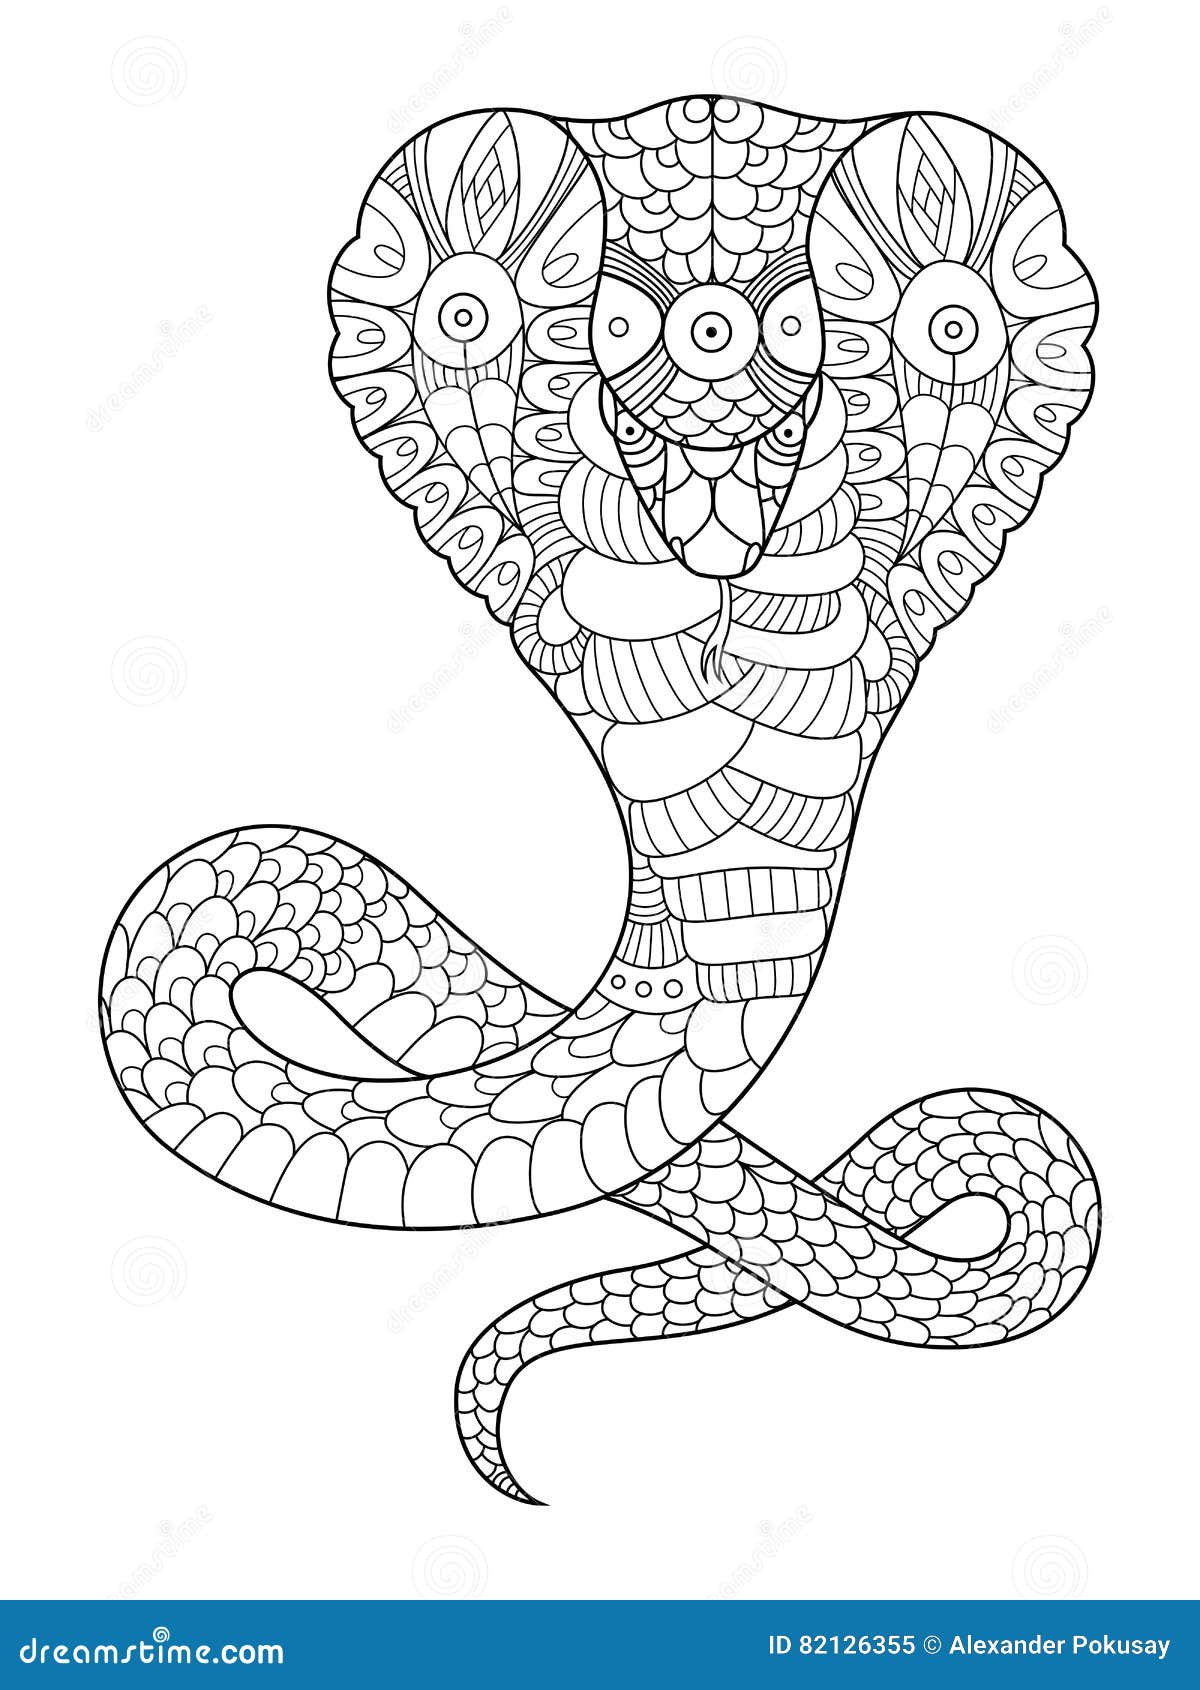 cobra snake tattoo